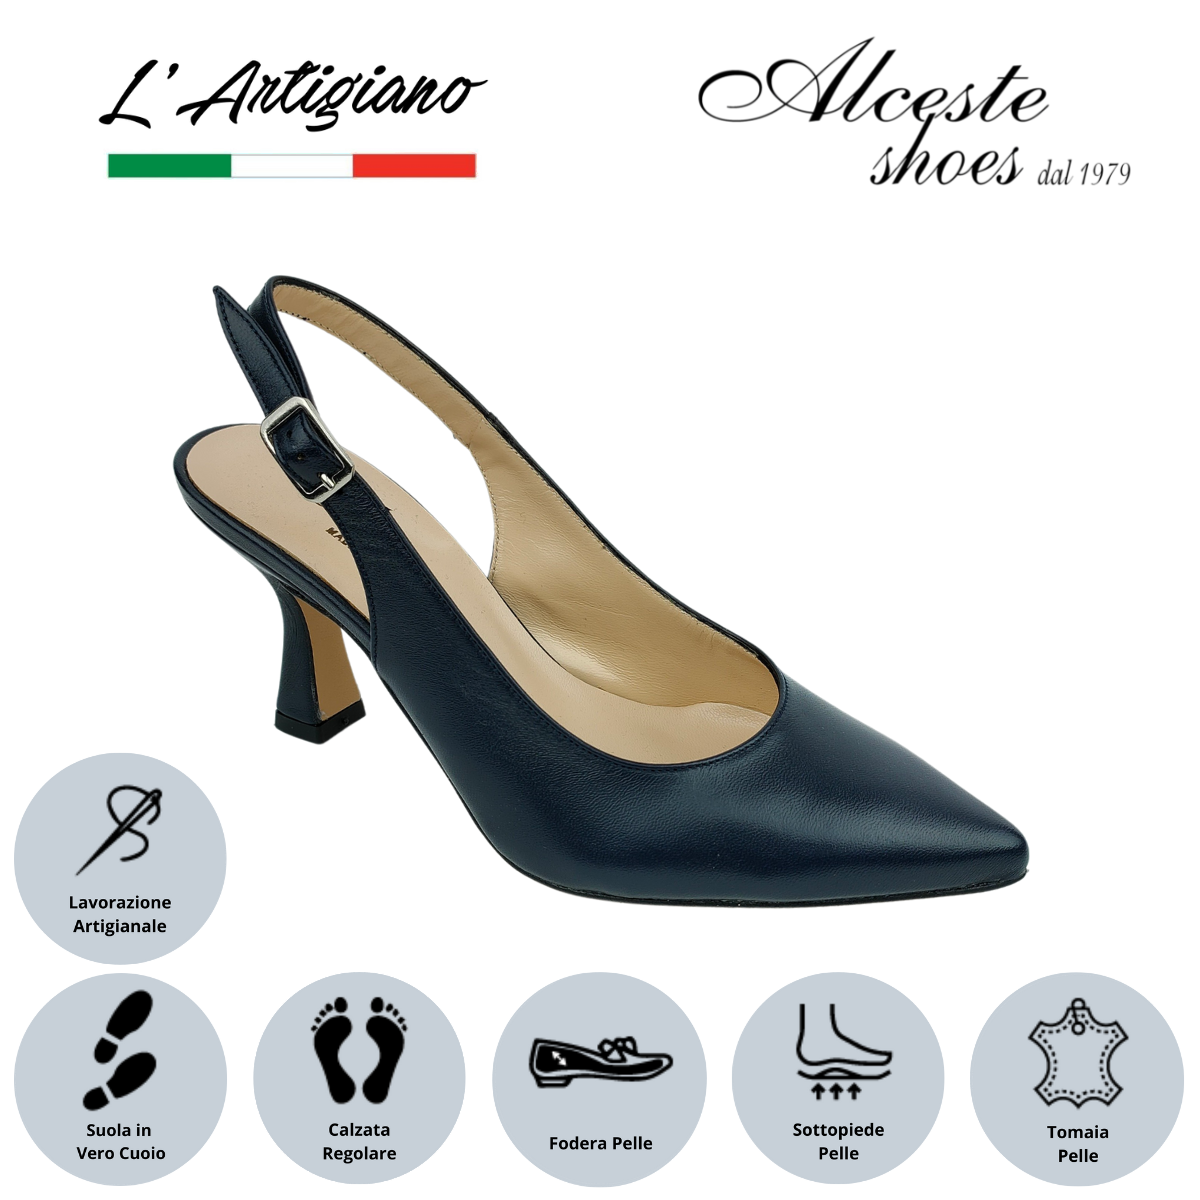 Chanel "L'Artigiano" Art. 422 in Pelle Blu Alceste Shoes 5 1